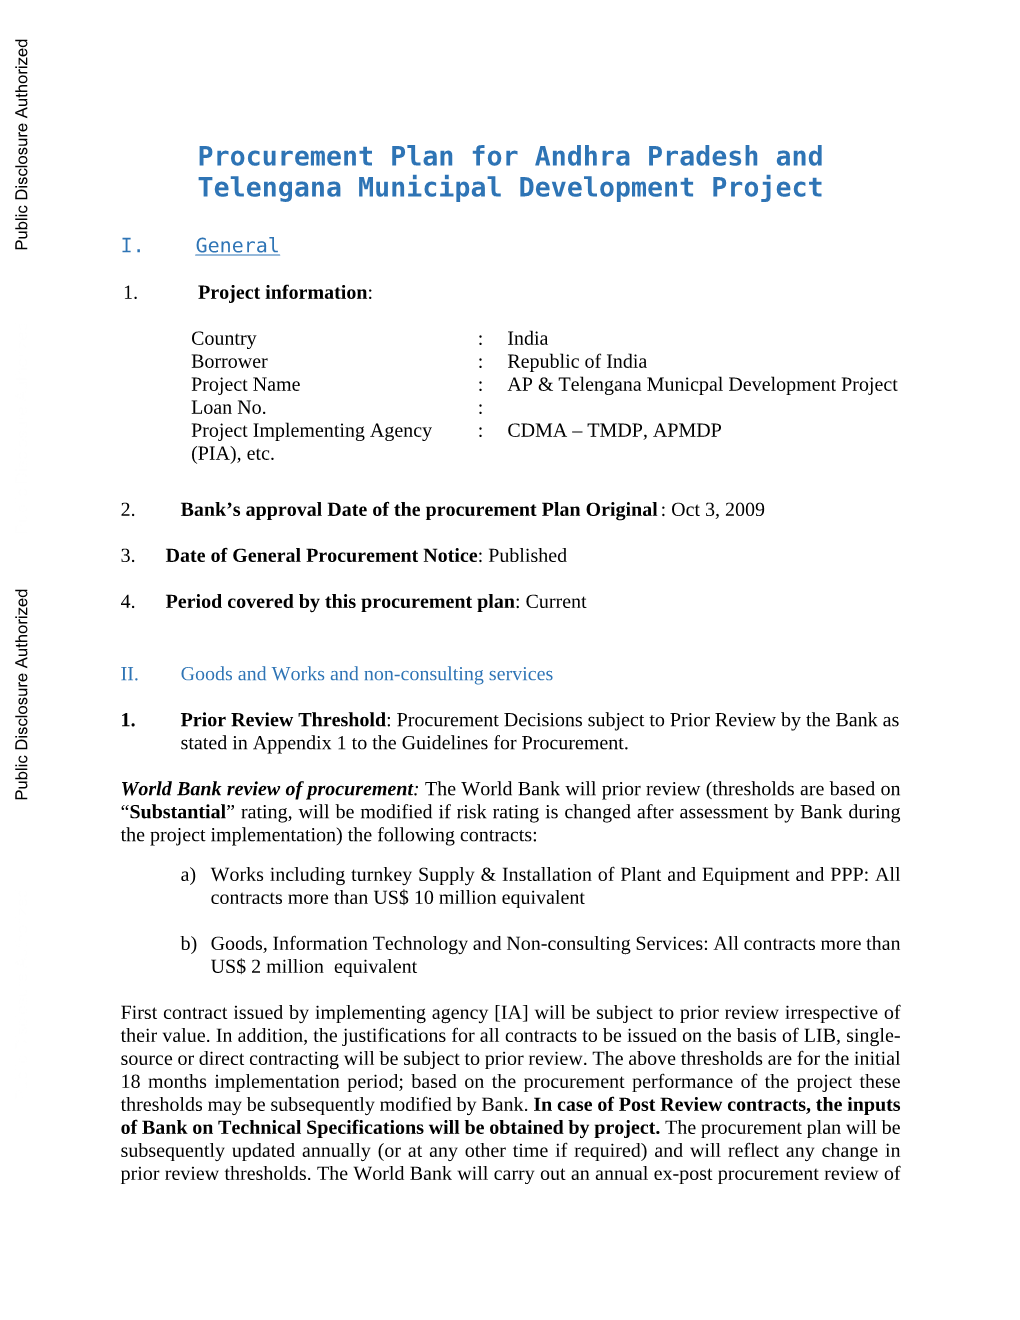 Procurement Plan for Andhra Pradesh and Telengana Municipal Development Project